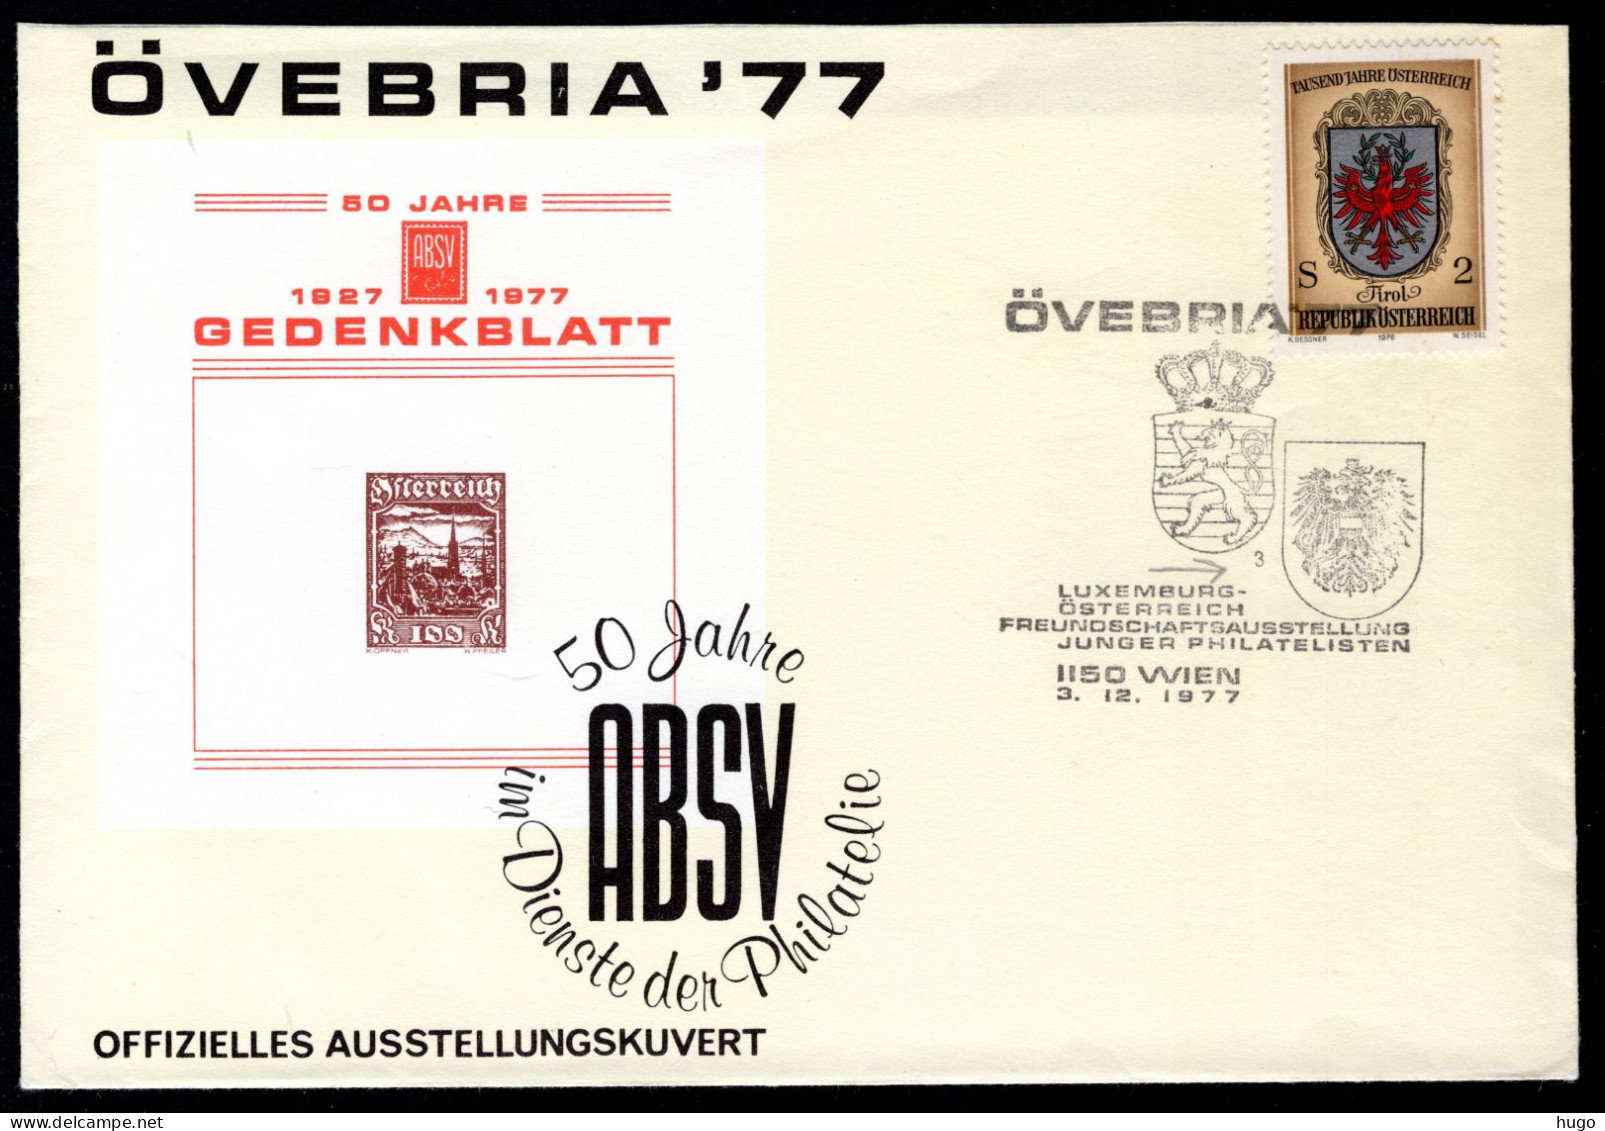 OOSTENRIJK Yt. Luxemburg - Osterreich Freundschaft 3-12-1977 ÖVEBRIA '77 - Covers & Documents